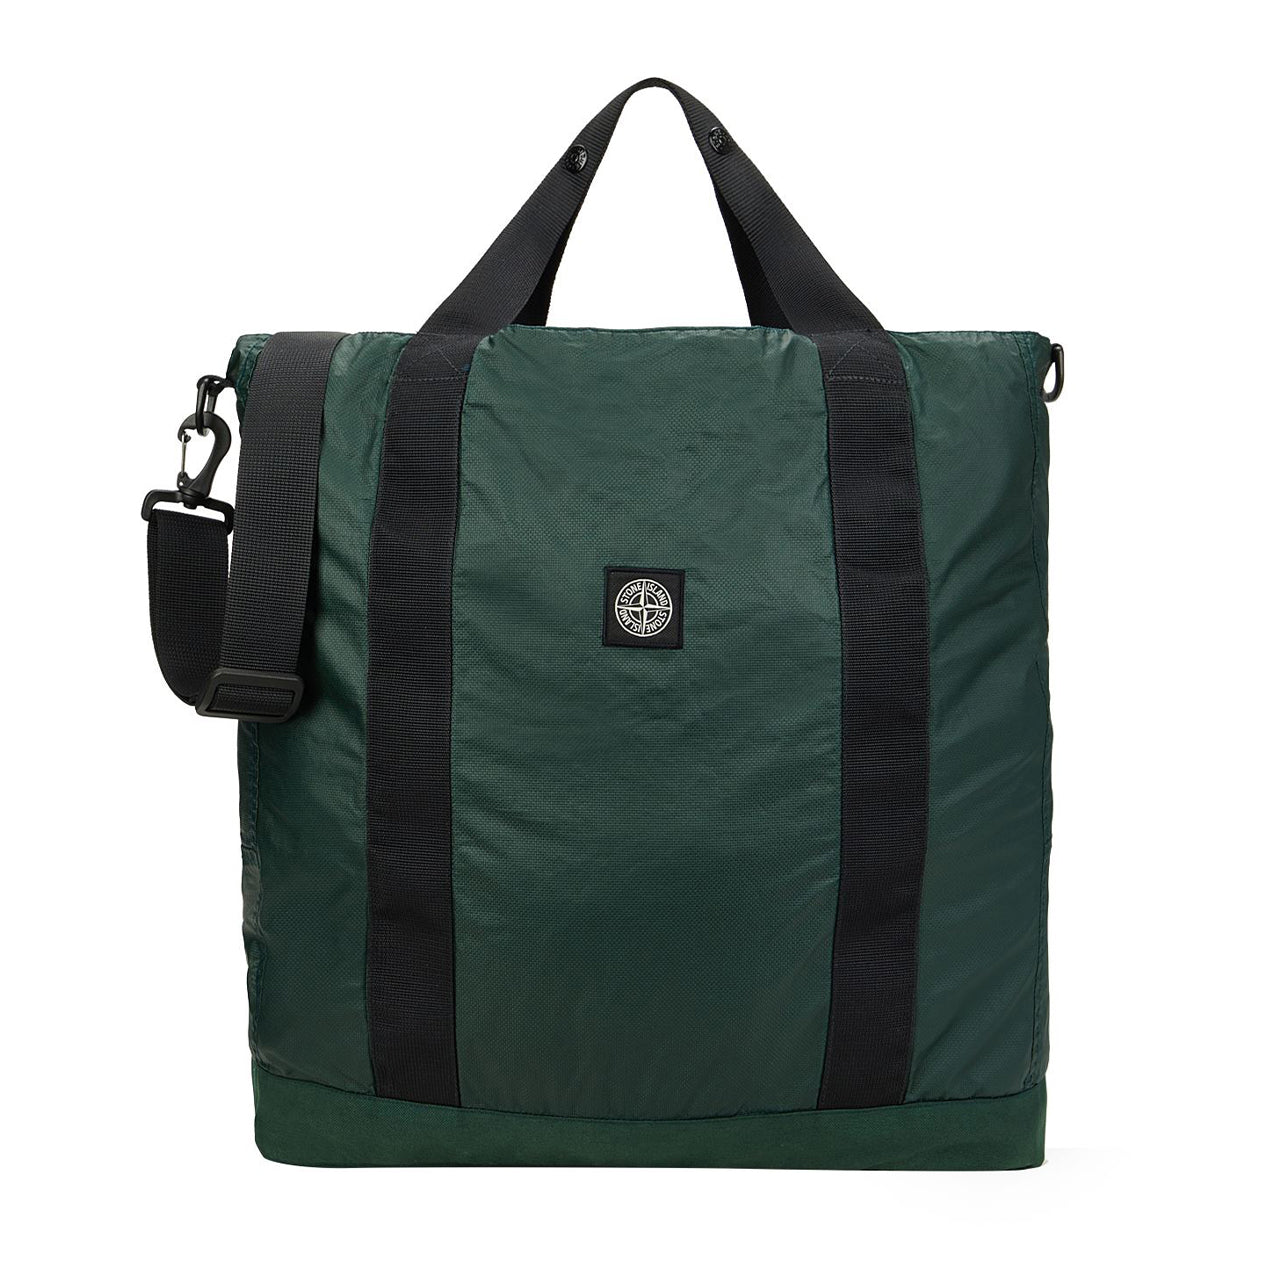 stone island bag (green) - 781591470.v0053 - a.plus